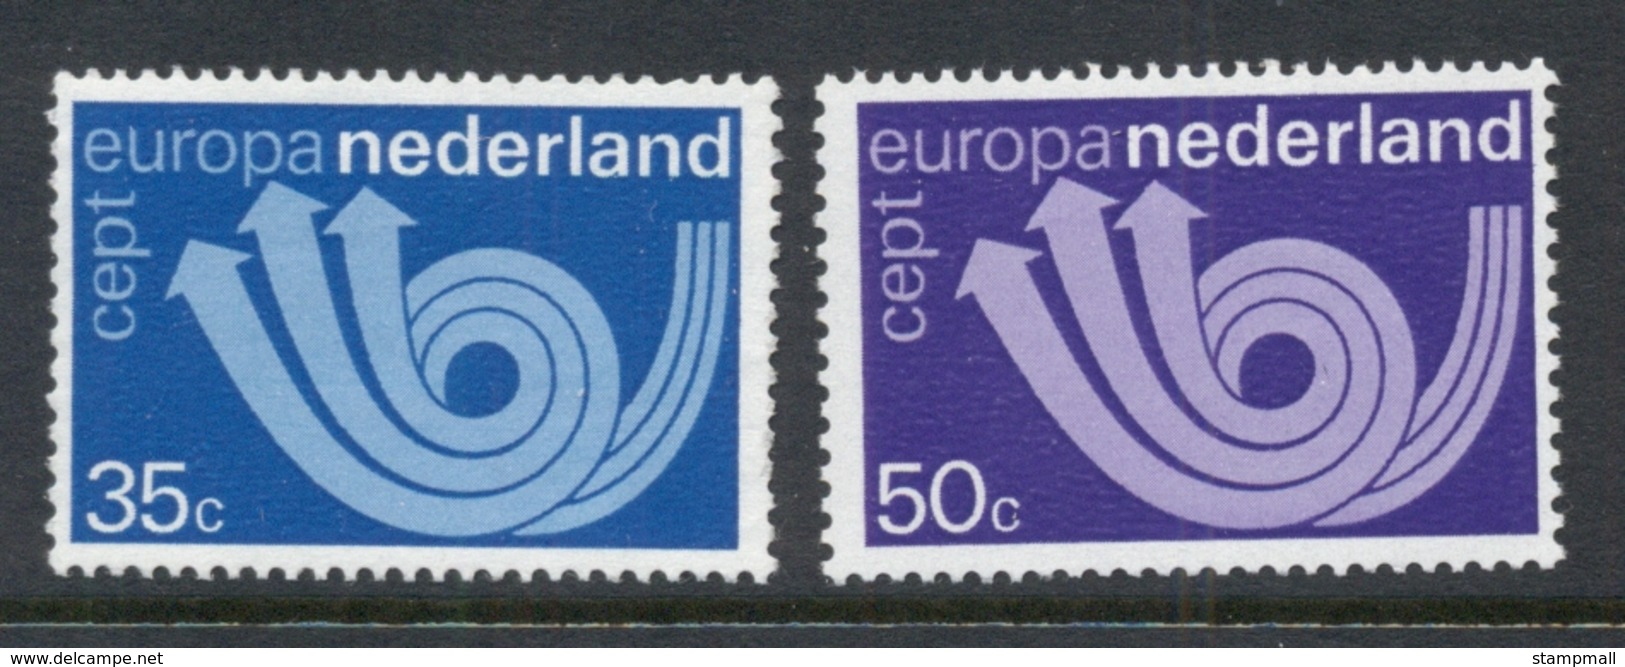 Netherlands 1973 Europa MUH - Unclassified